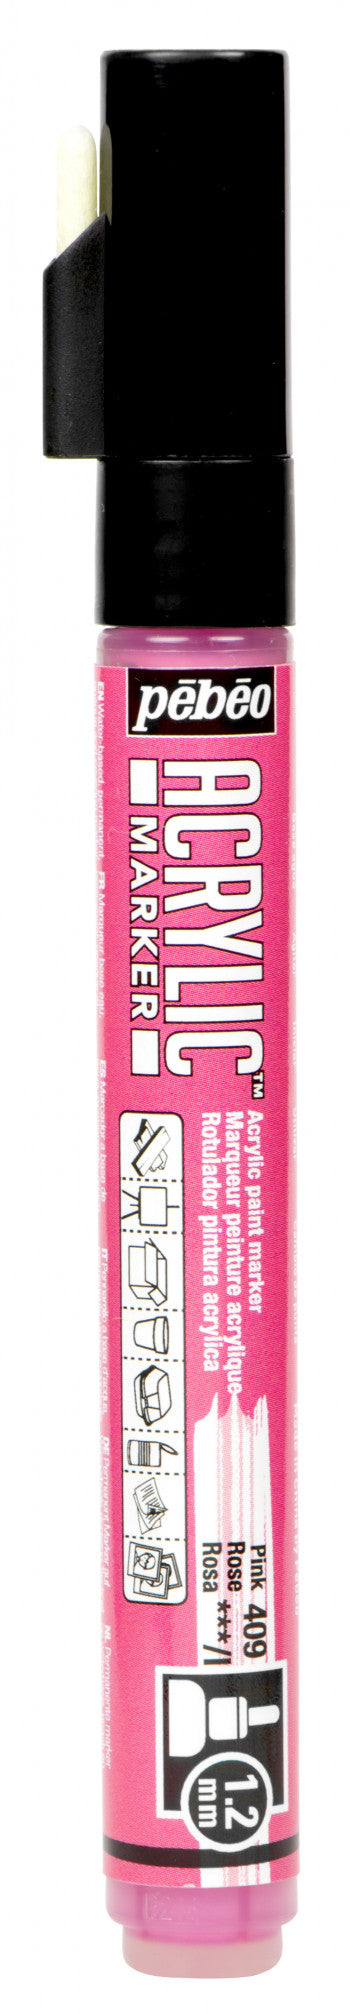 Acrylic Marker 1.2mm Pebeo      Rose - 409